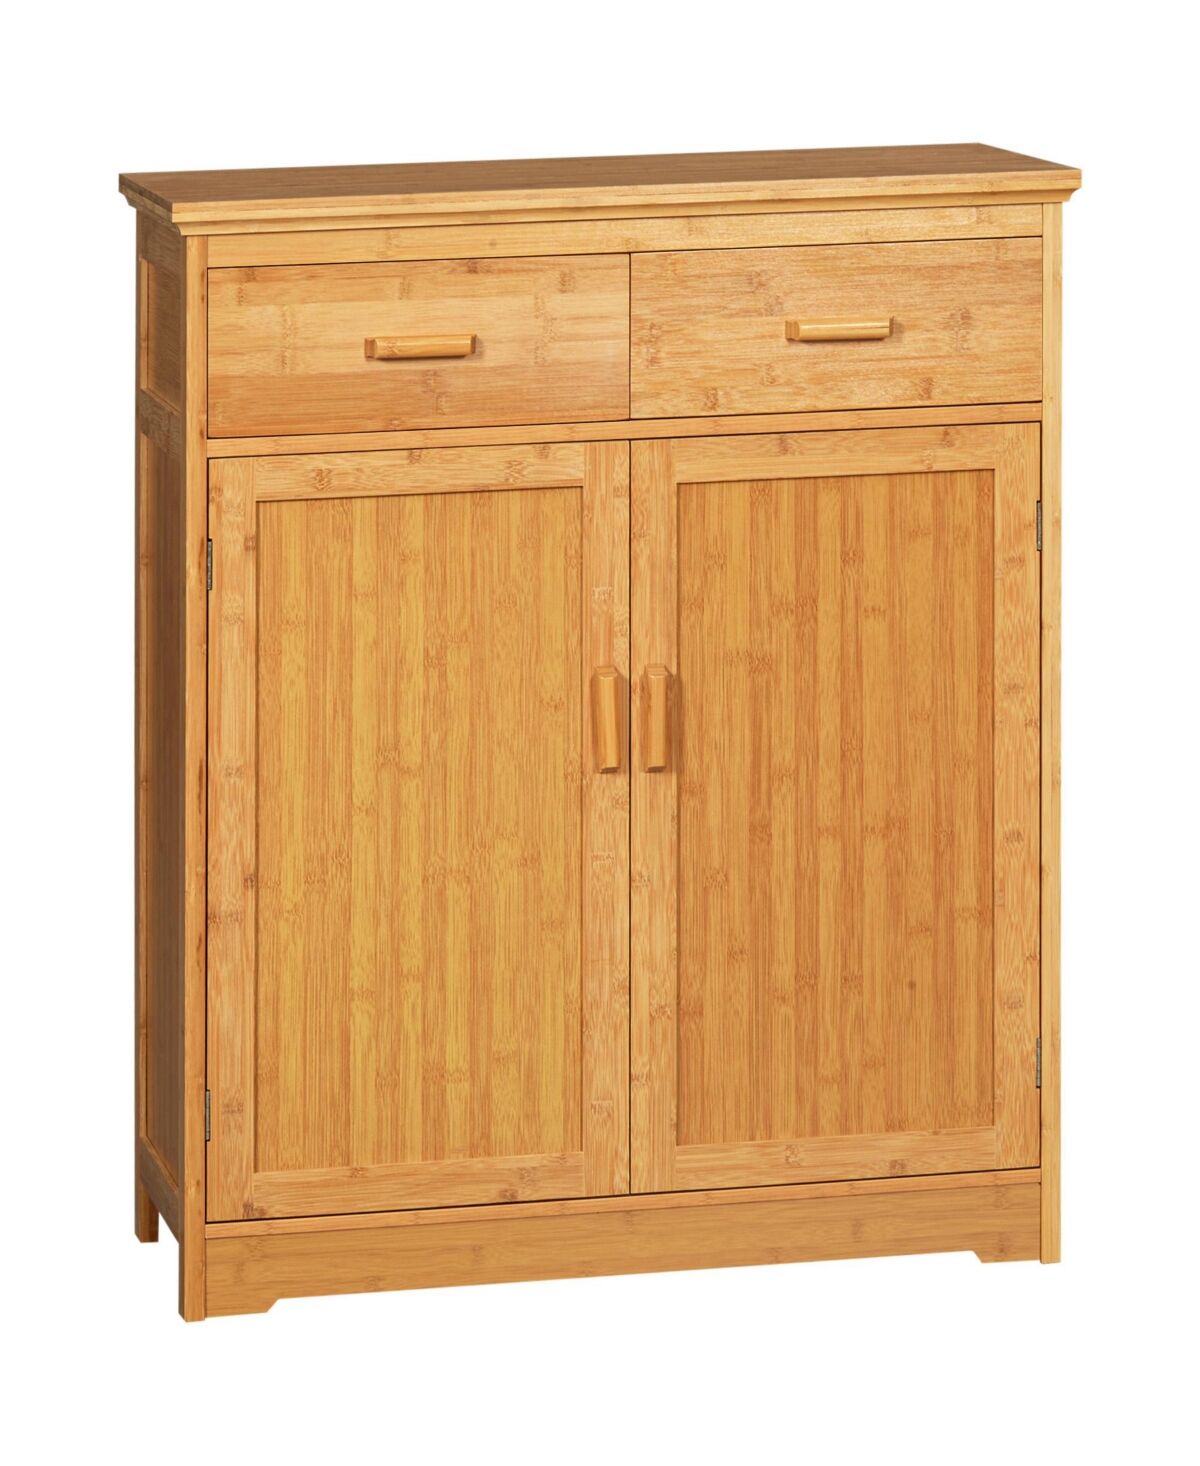 Homcom Bathroom Storage Cabinet, Bamboo Floor Cabinet Organizer with Doors and Adjustable Shelves, Natural - Natural